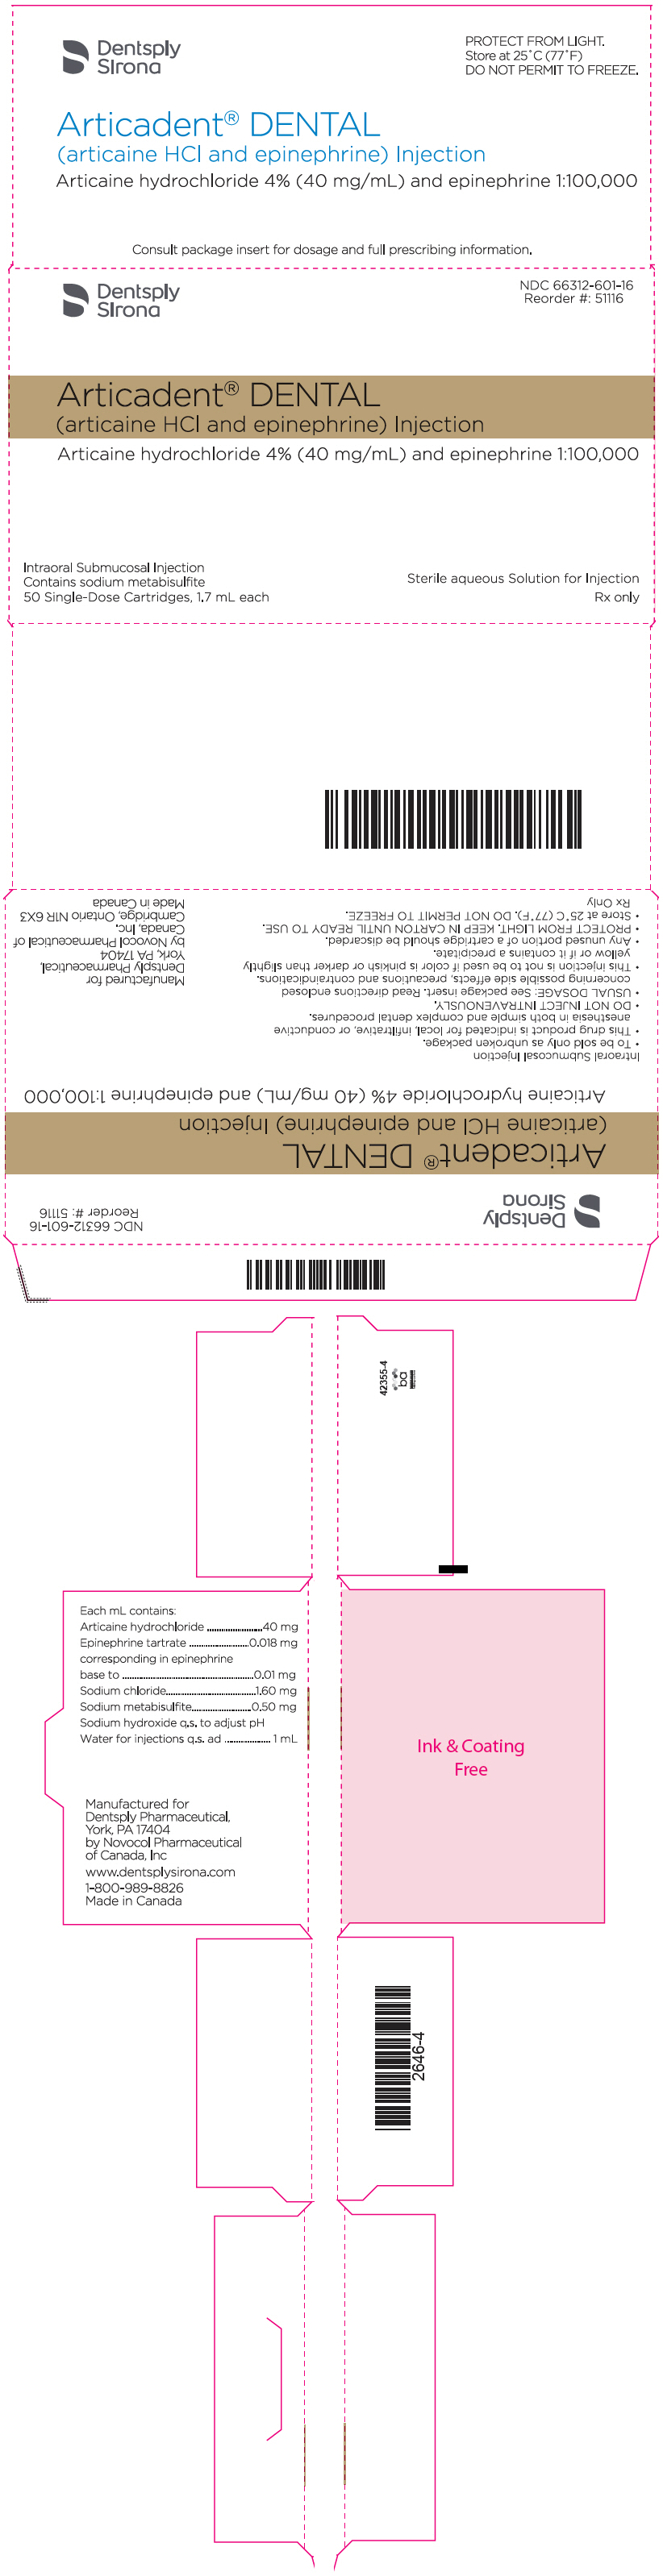 PRINCIPAL DISPLAY PANEL - 1.7 mL Cartridge Carton - epinephrine 1:100,000